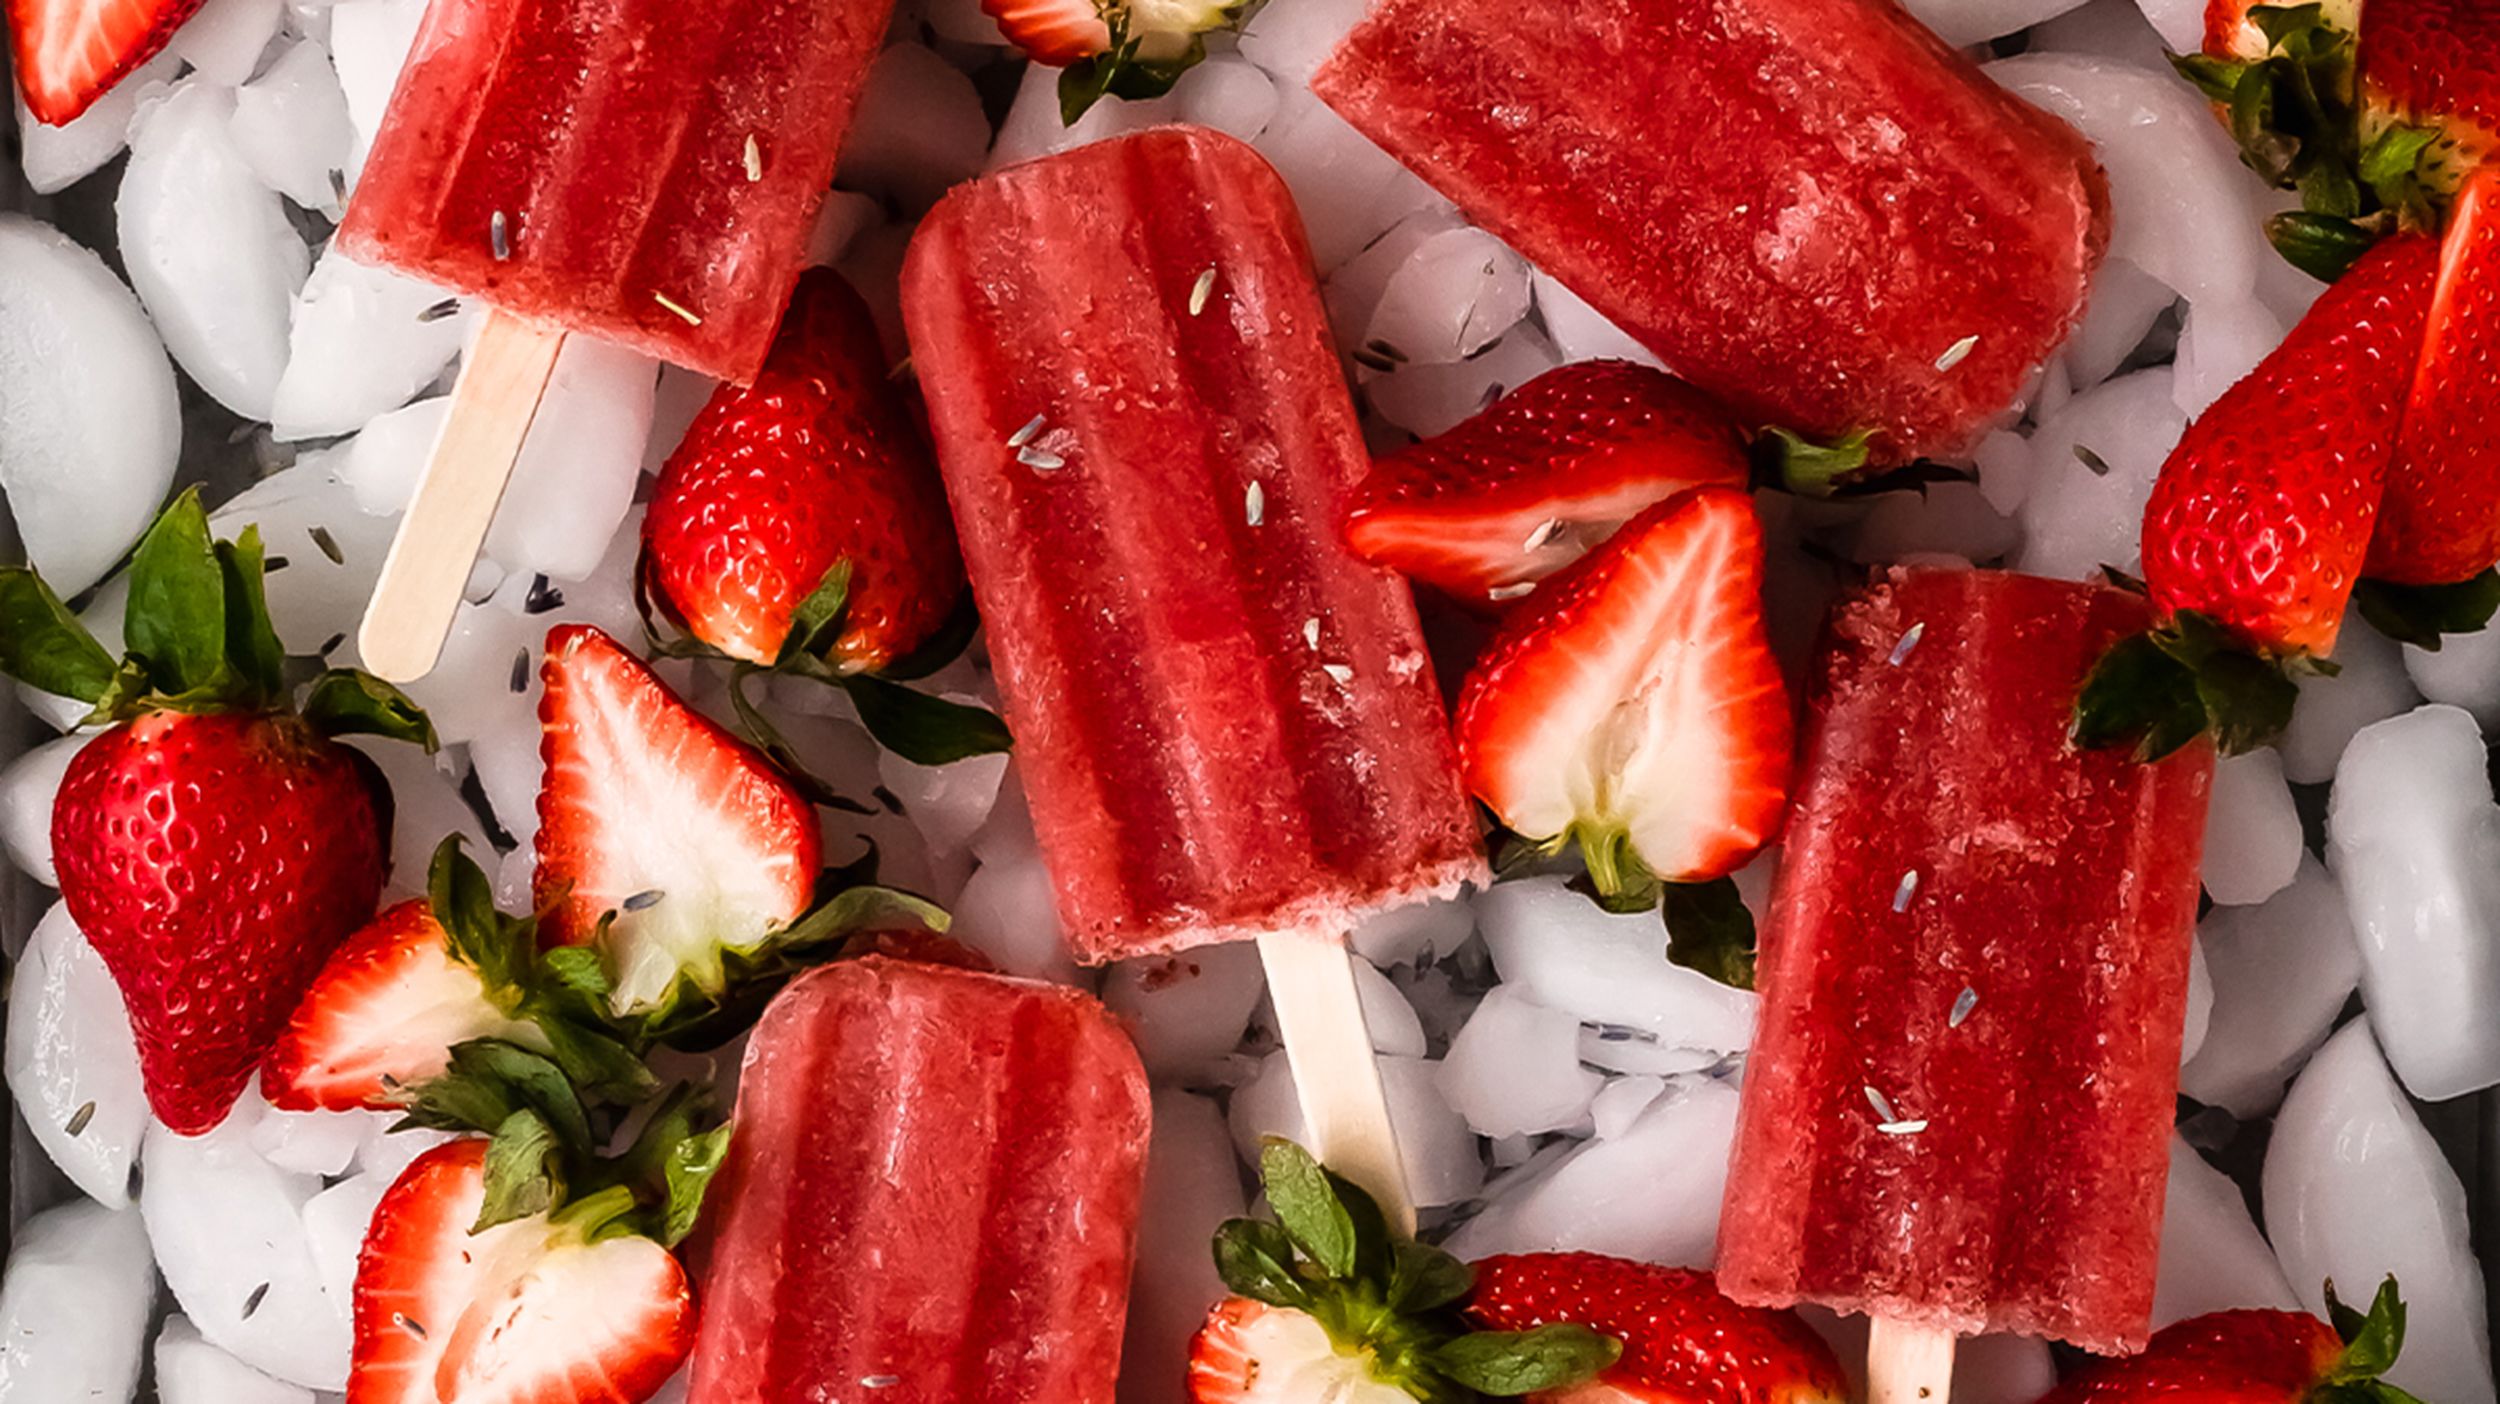 Frozen Popsicle Molds Ice Cream Pop Maker Freezer Tray Fruit with Sticks Summer